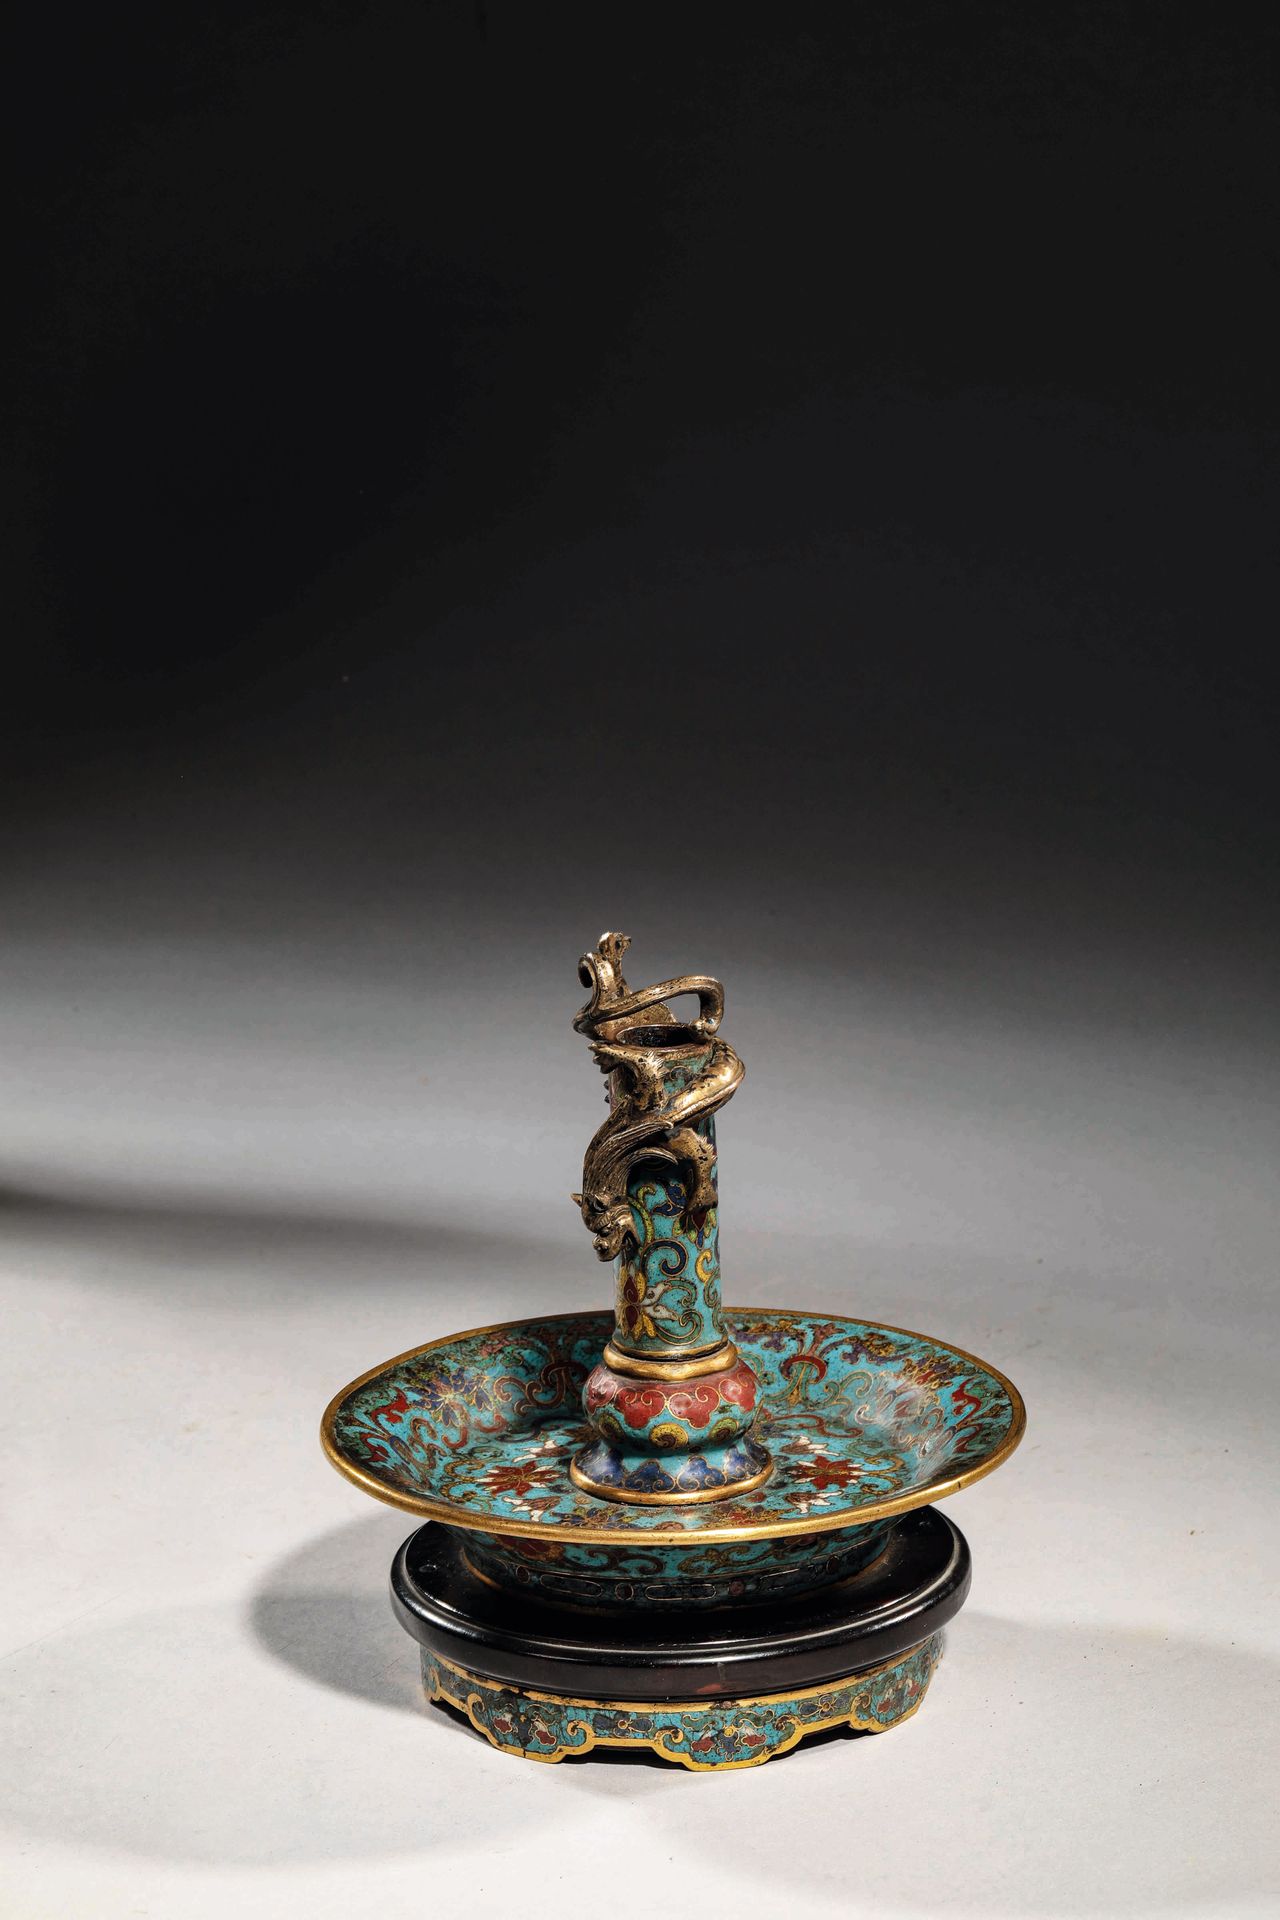 Null 北京景泰蓝珐琅彩烛台，饰以蟠龙。
中国清朝 18-19世纪